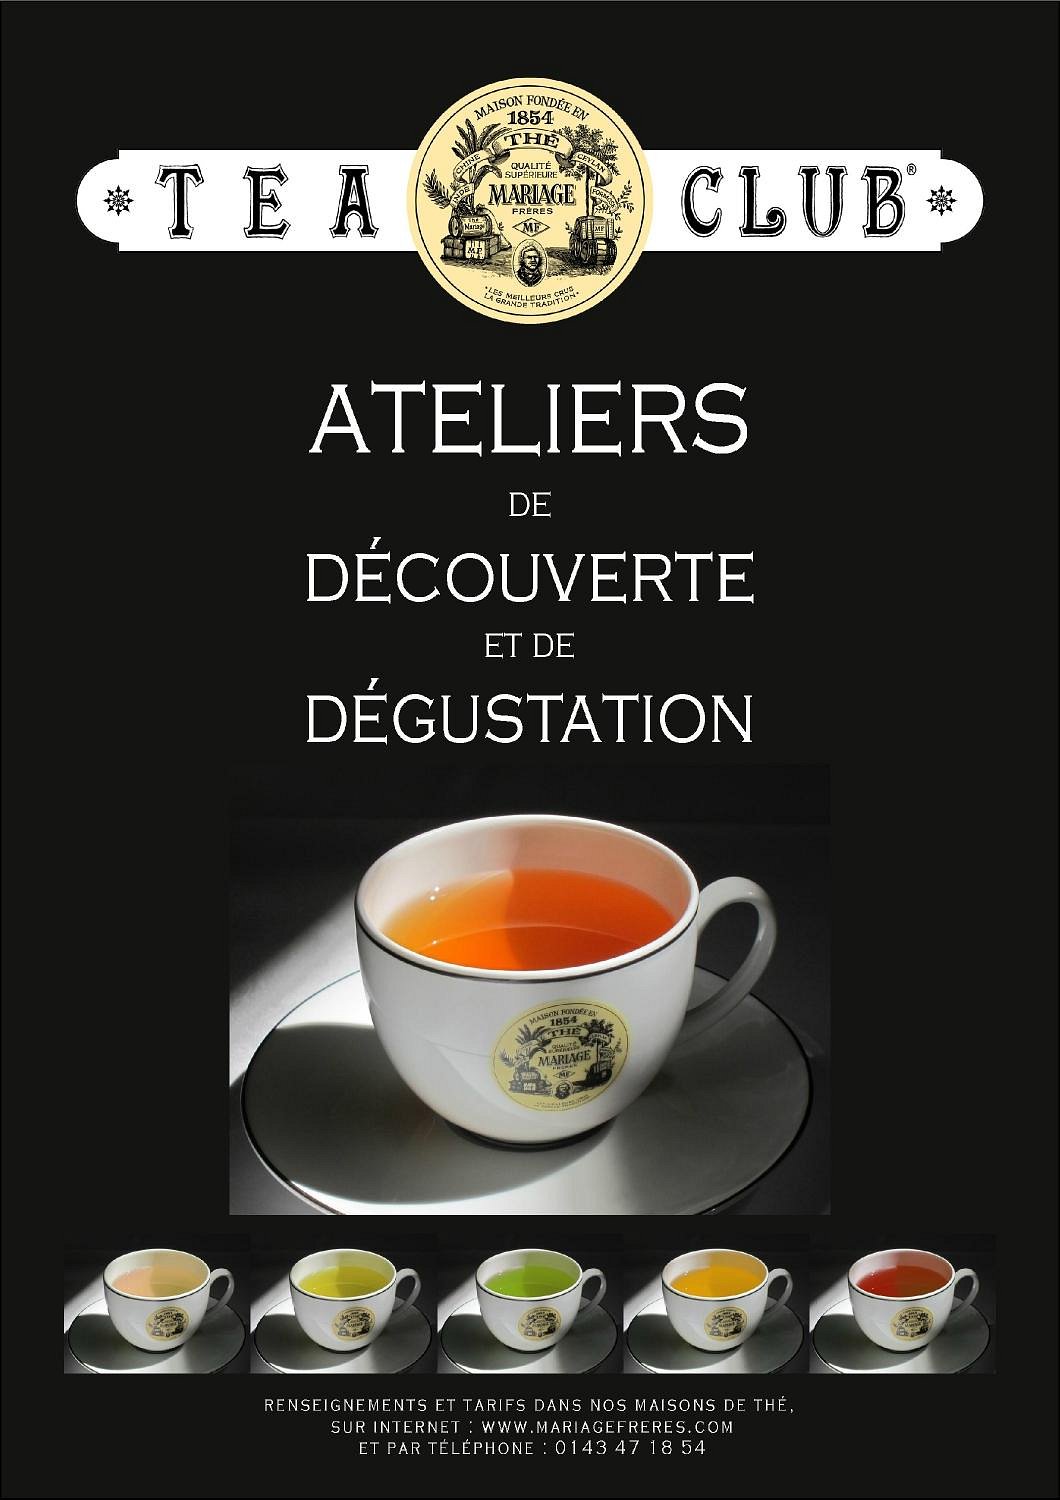 TEA CLUB MARIAGE FRÈRES - ATELIERS DE DÉCOUVERTE ET DE DÉGUSTATION: All You  Need to Know BEFORE You Go (with Photos)